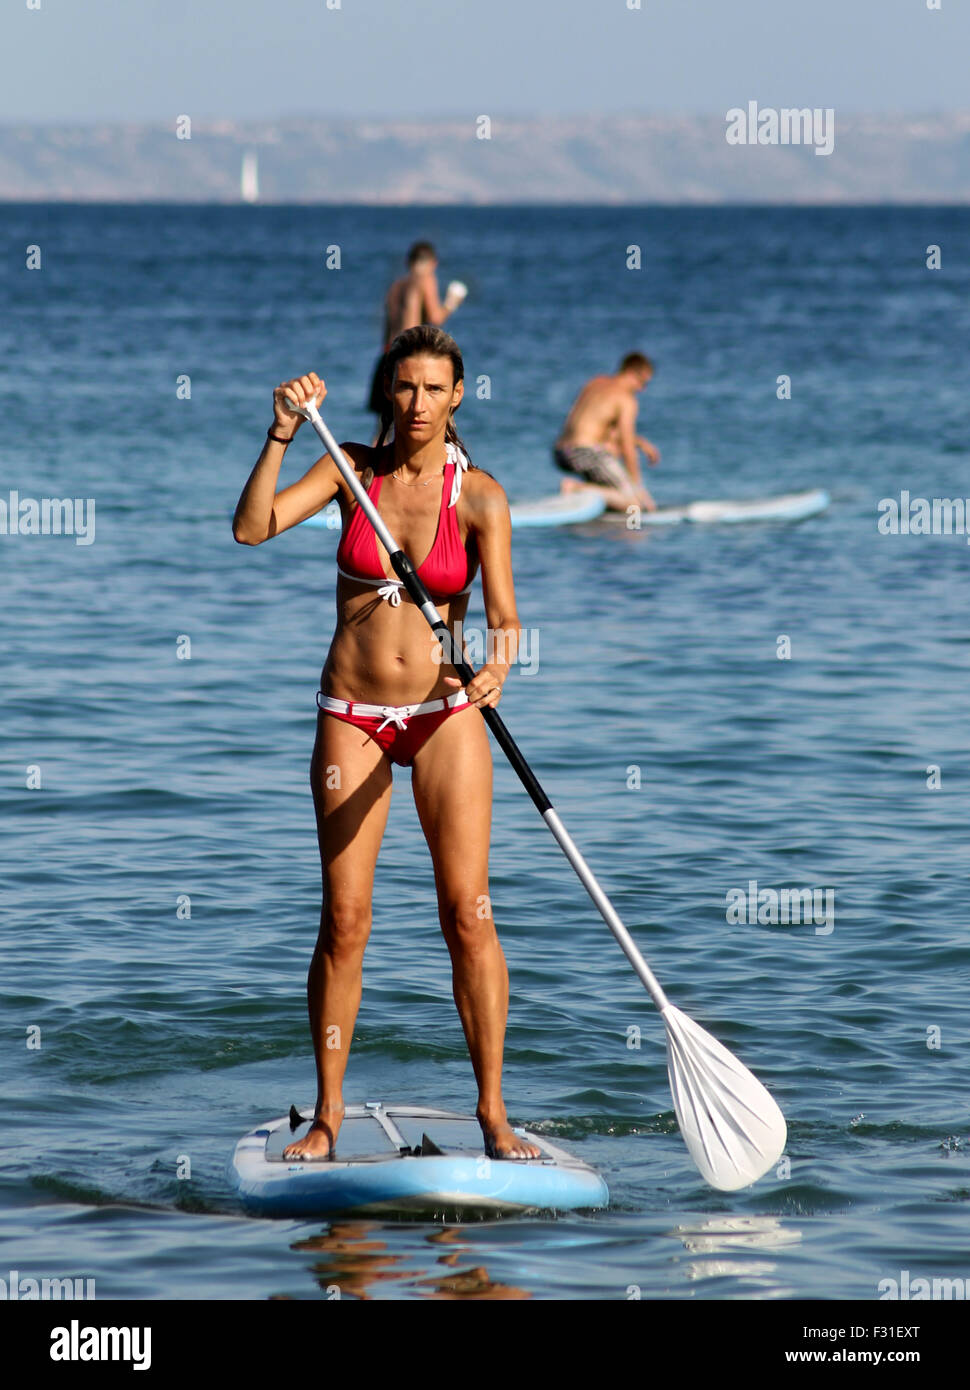 PALMA NOVA BEACH, MAJORCA, SPAIN - 25th August 2015: Palma Nova beach resort on the 25th August 2015. A young woman is paddle bo Stock Photo